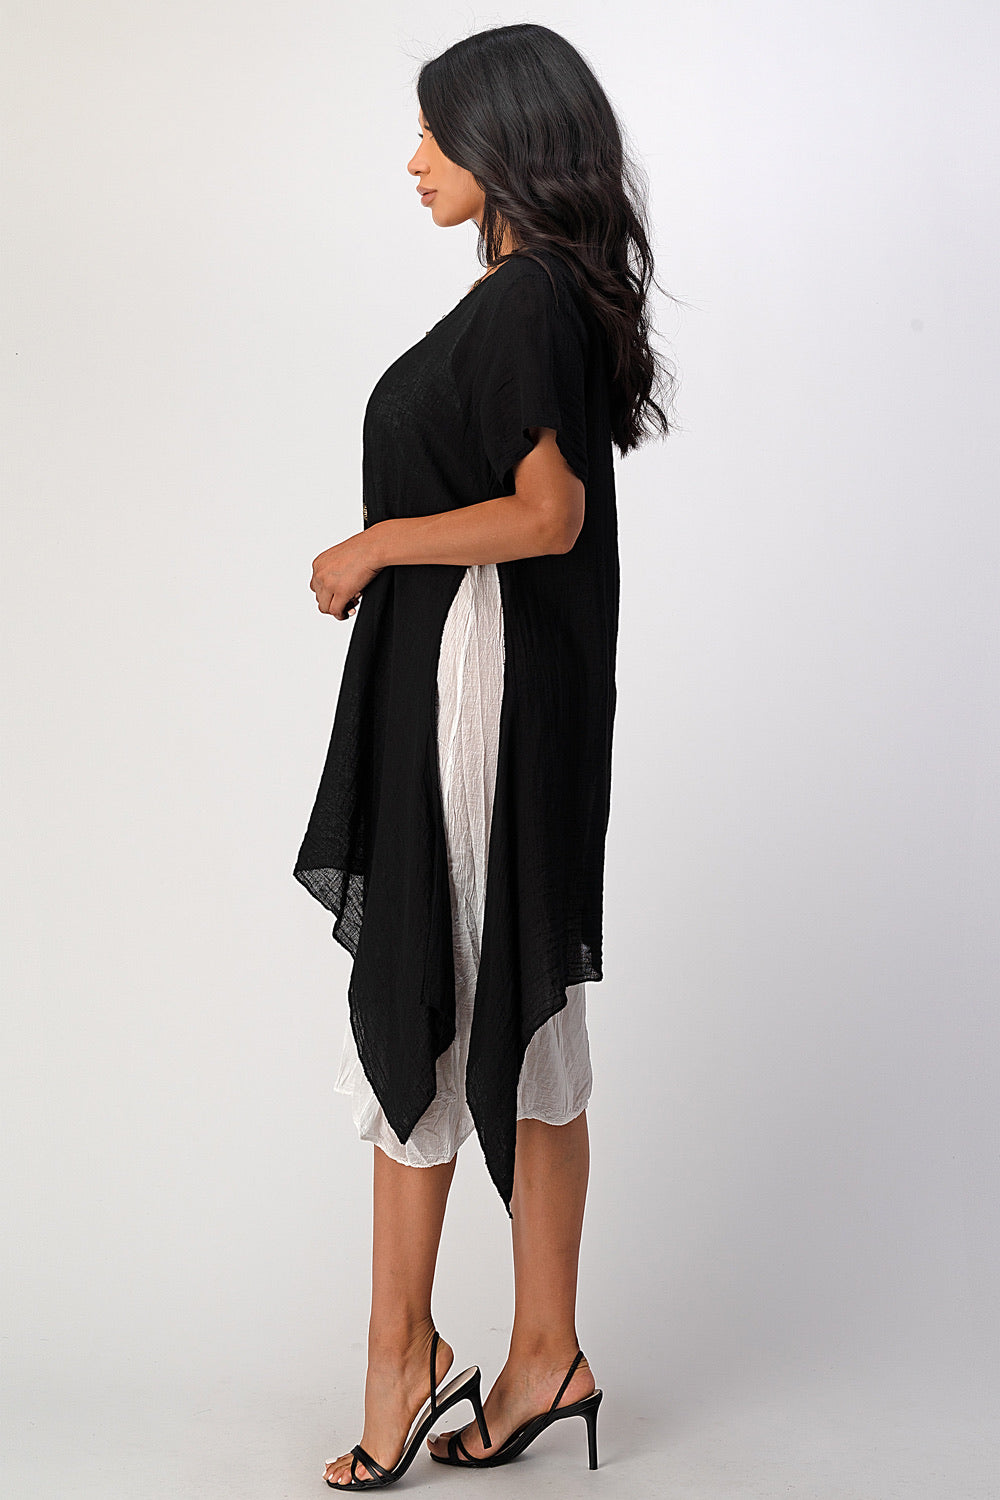 Raw Moda Italian Linen Marsala Dress Two Pieces - Rawmoda